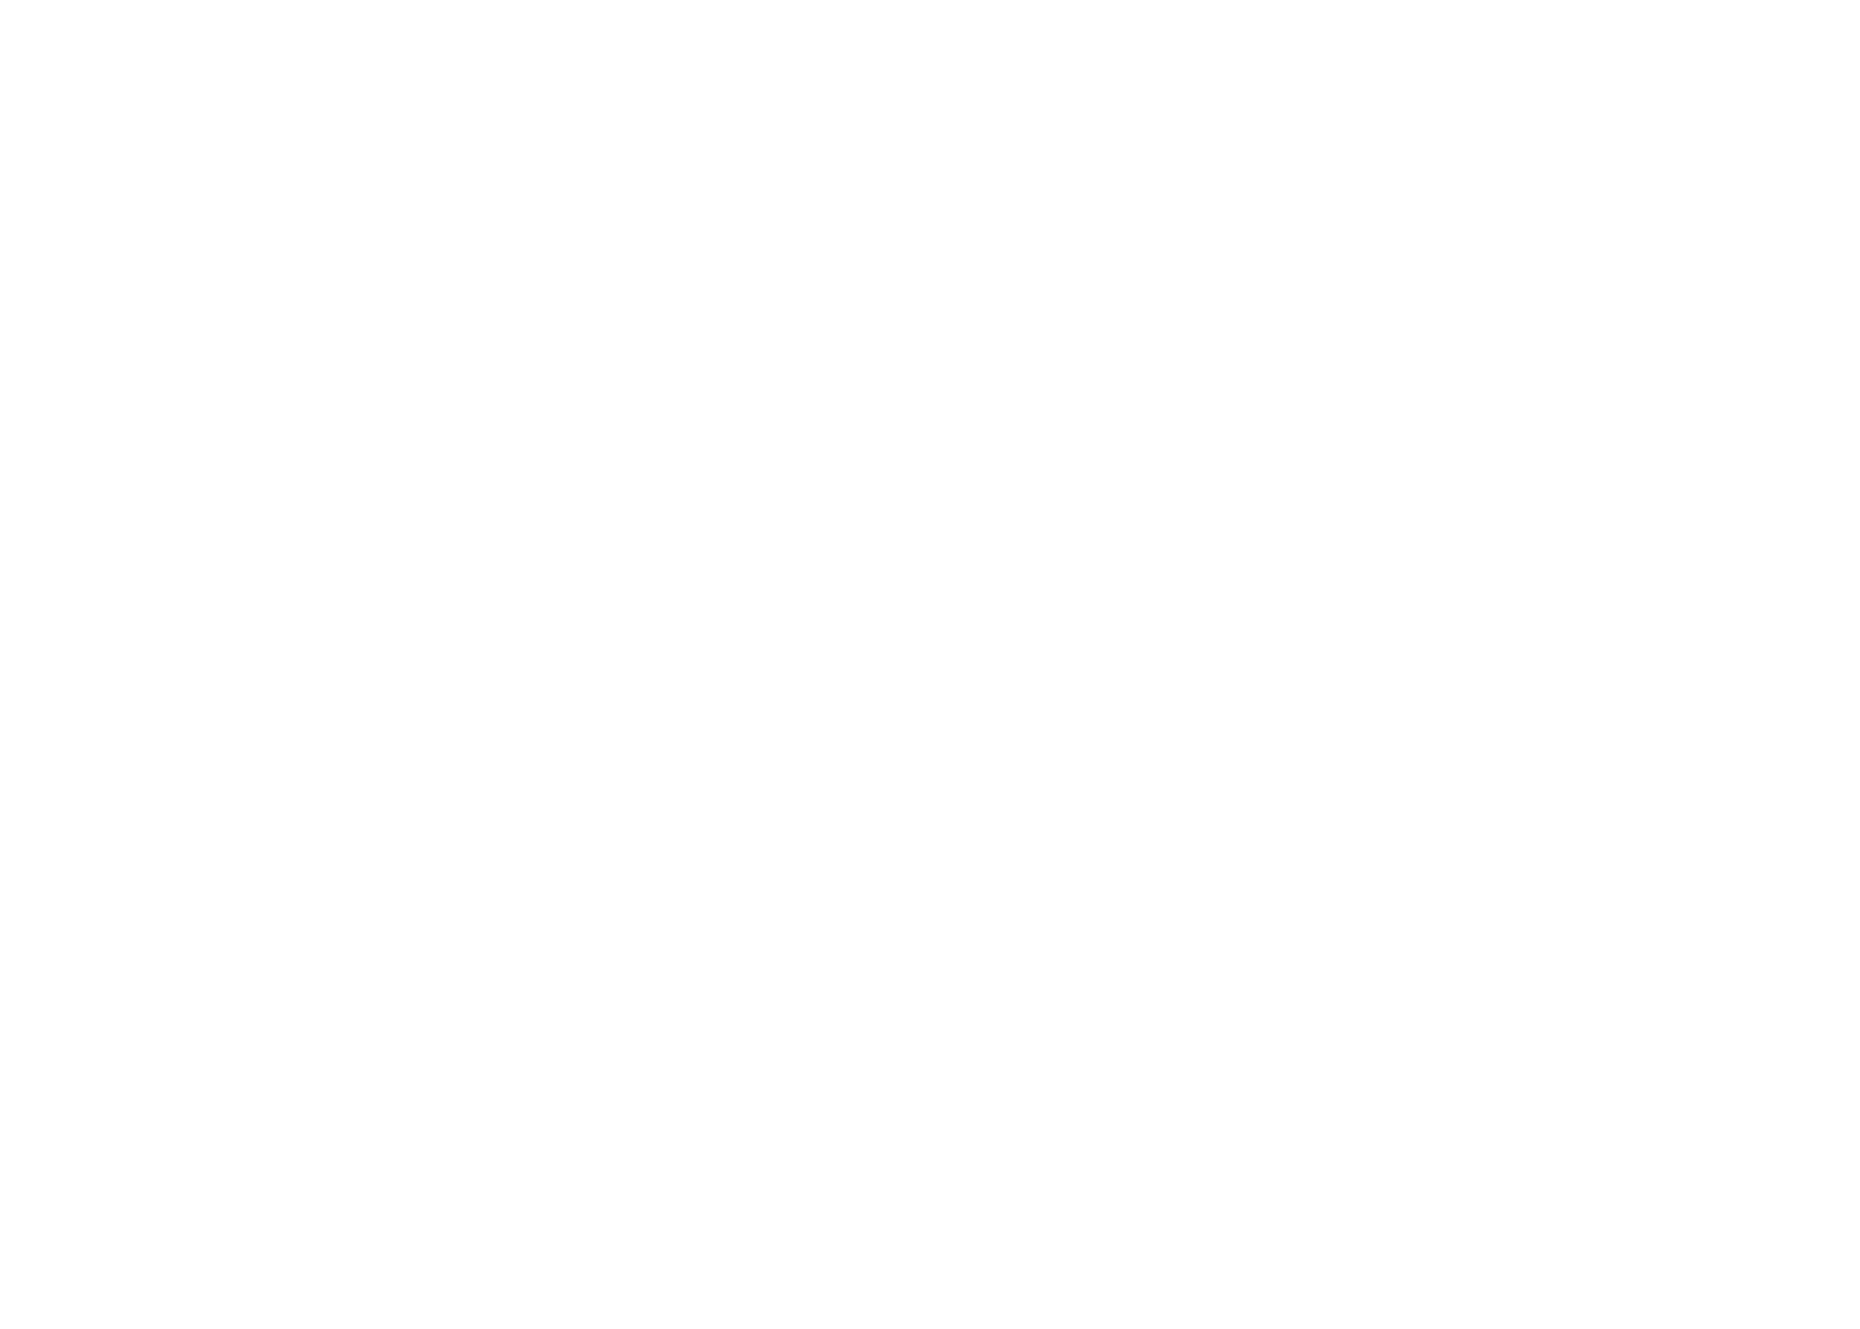 CropHealth AB